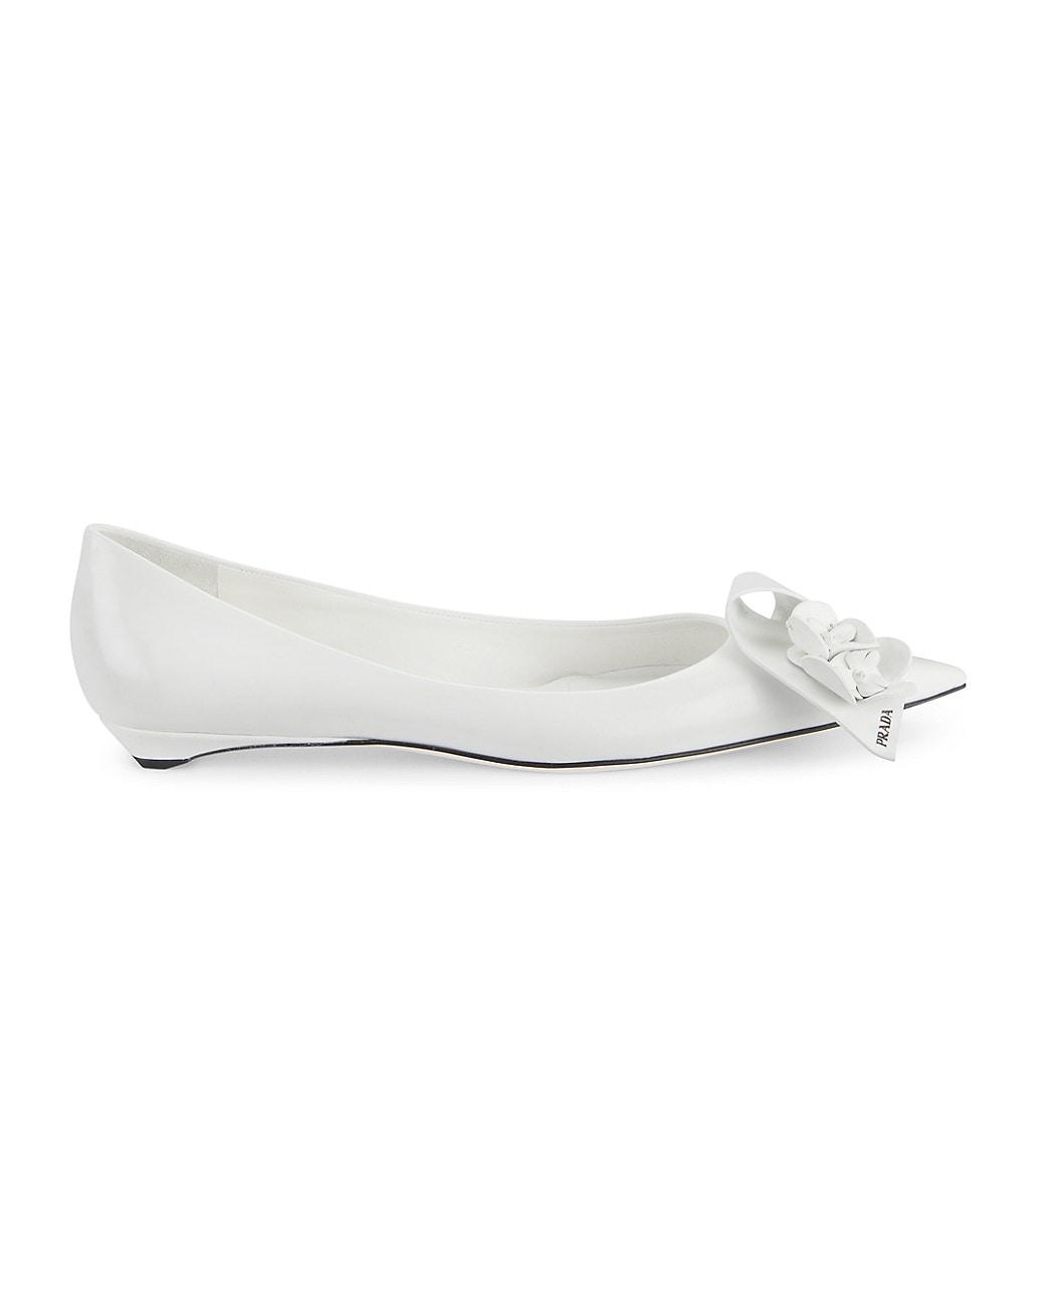 Prada Women's Sculptural Floral 45mm Kitten Heels - White - Size 8.5